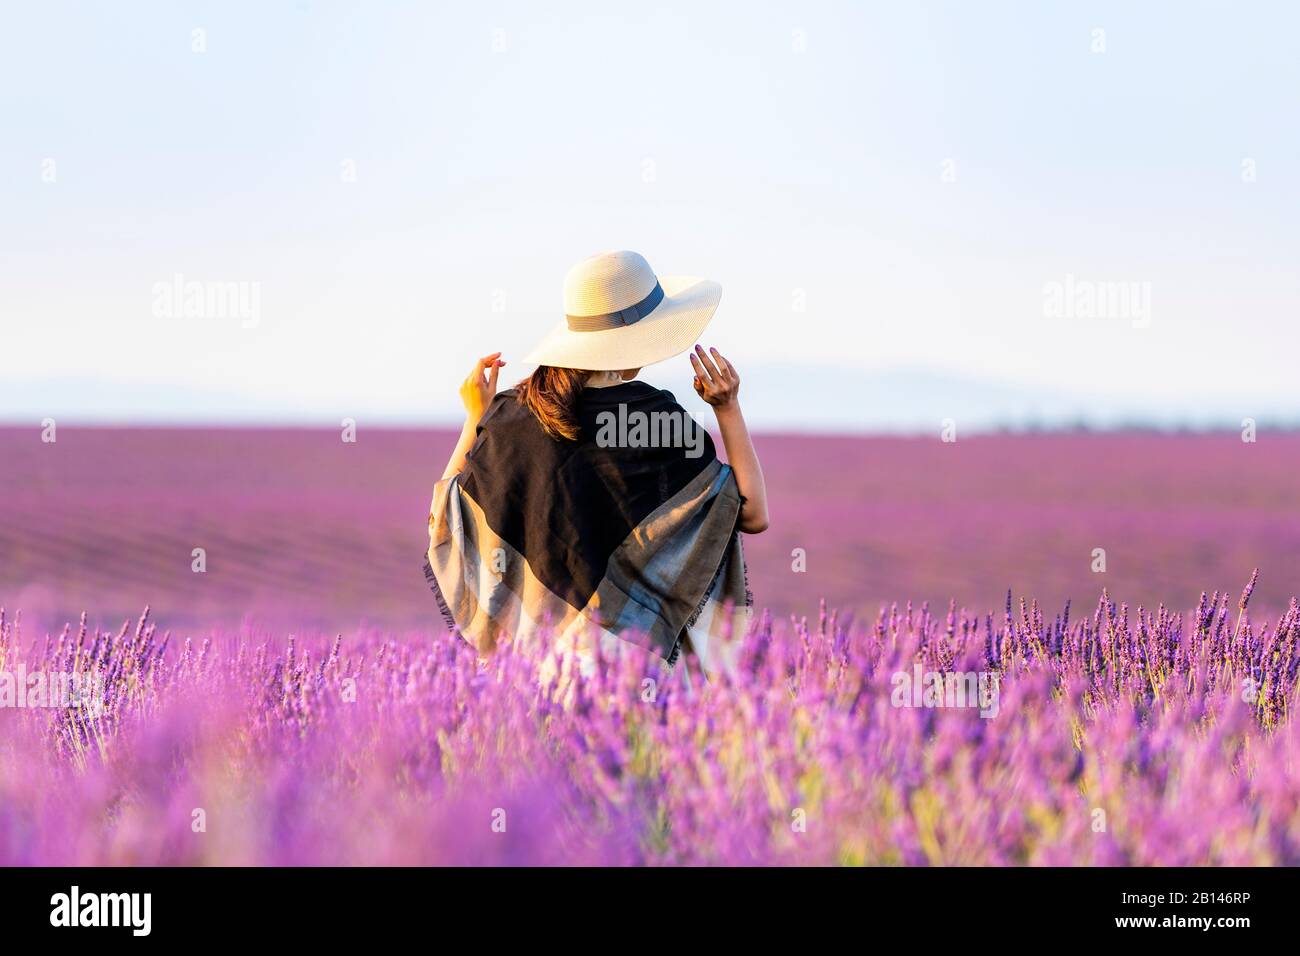 Lavender fields near Valensole in Southern France, Provence, France Stock Photo